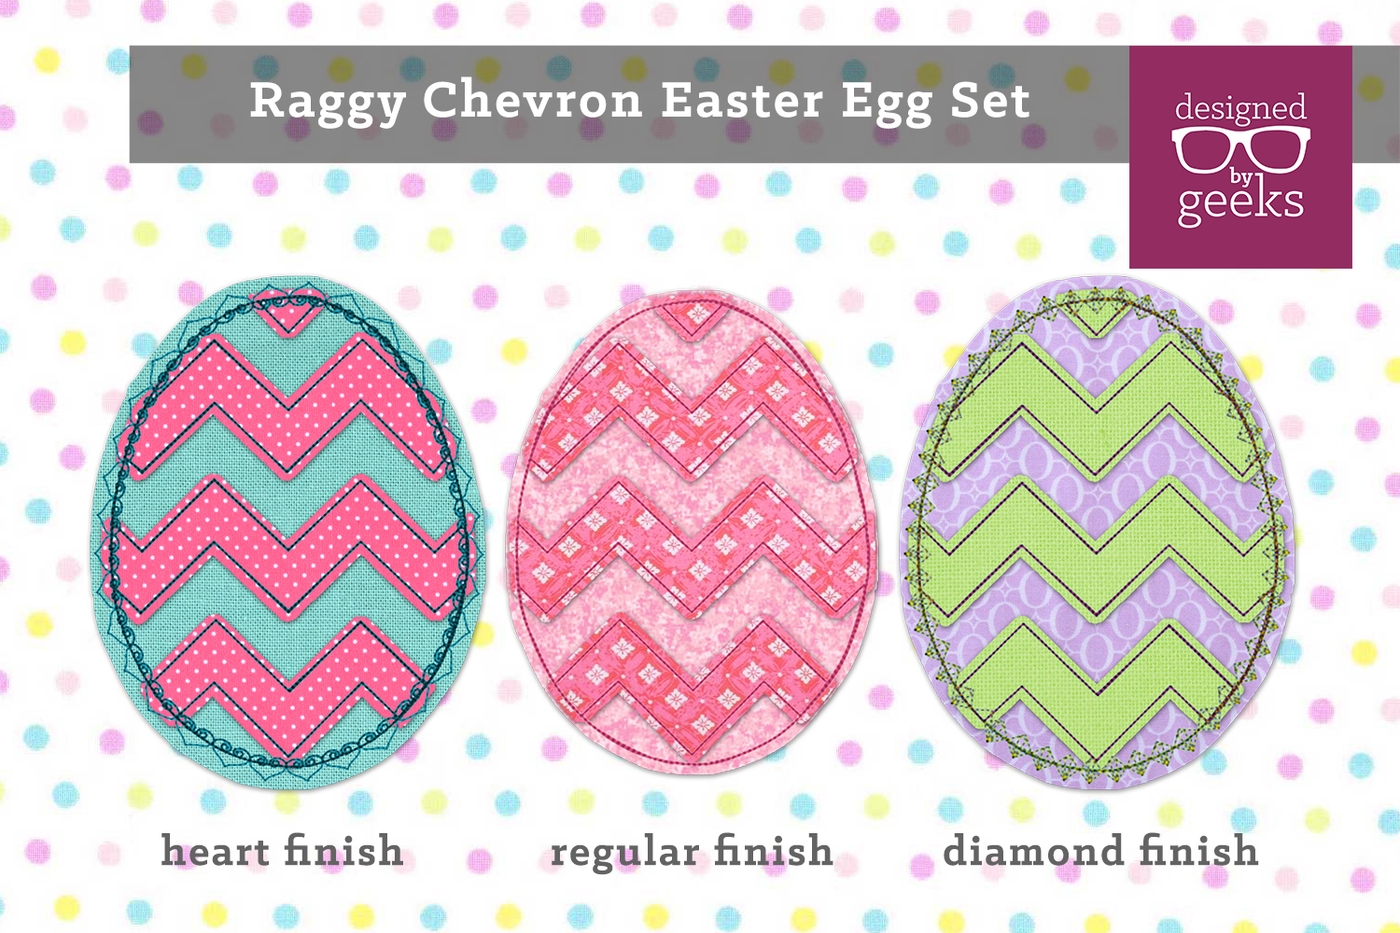 3 raggy applique chevron egg designs: heart finish, regular finish, diamond finish